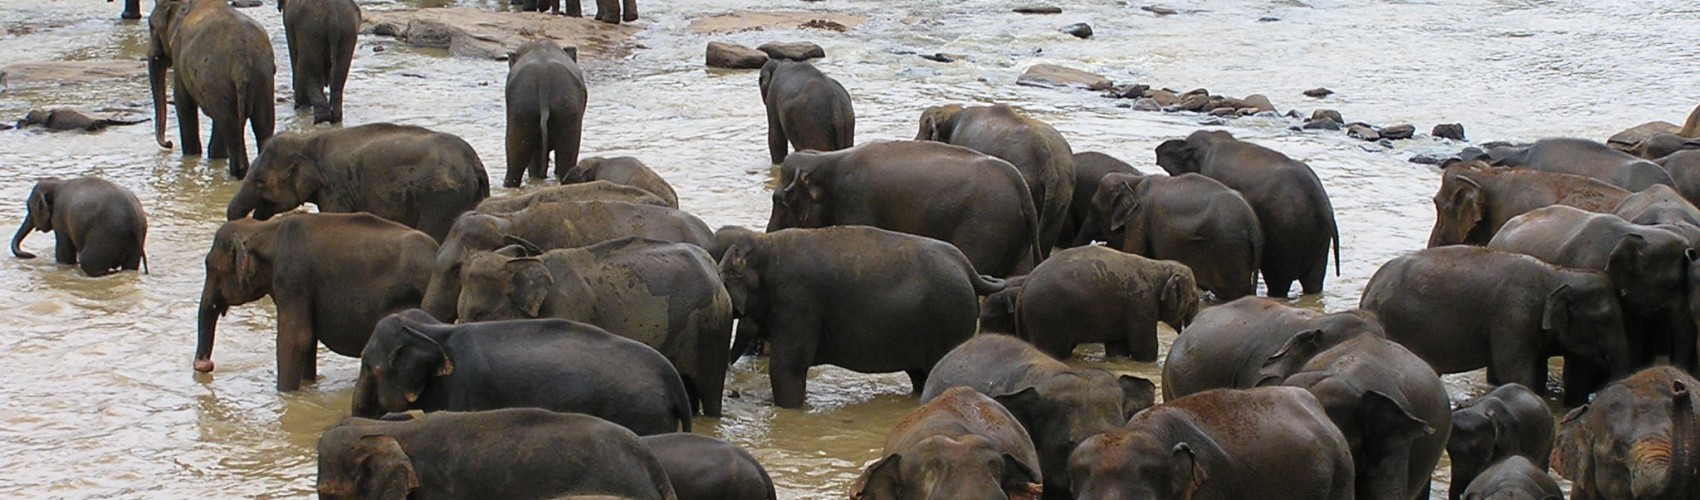 Elephants bathing, Sri Lanka